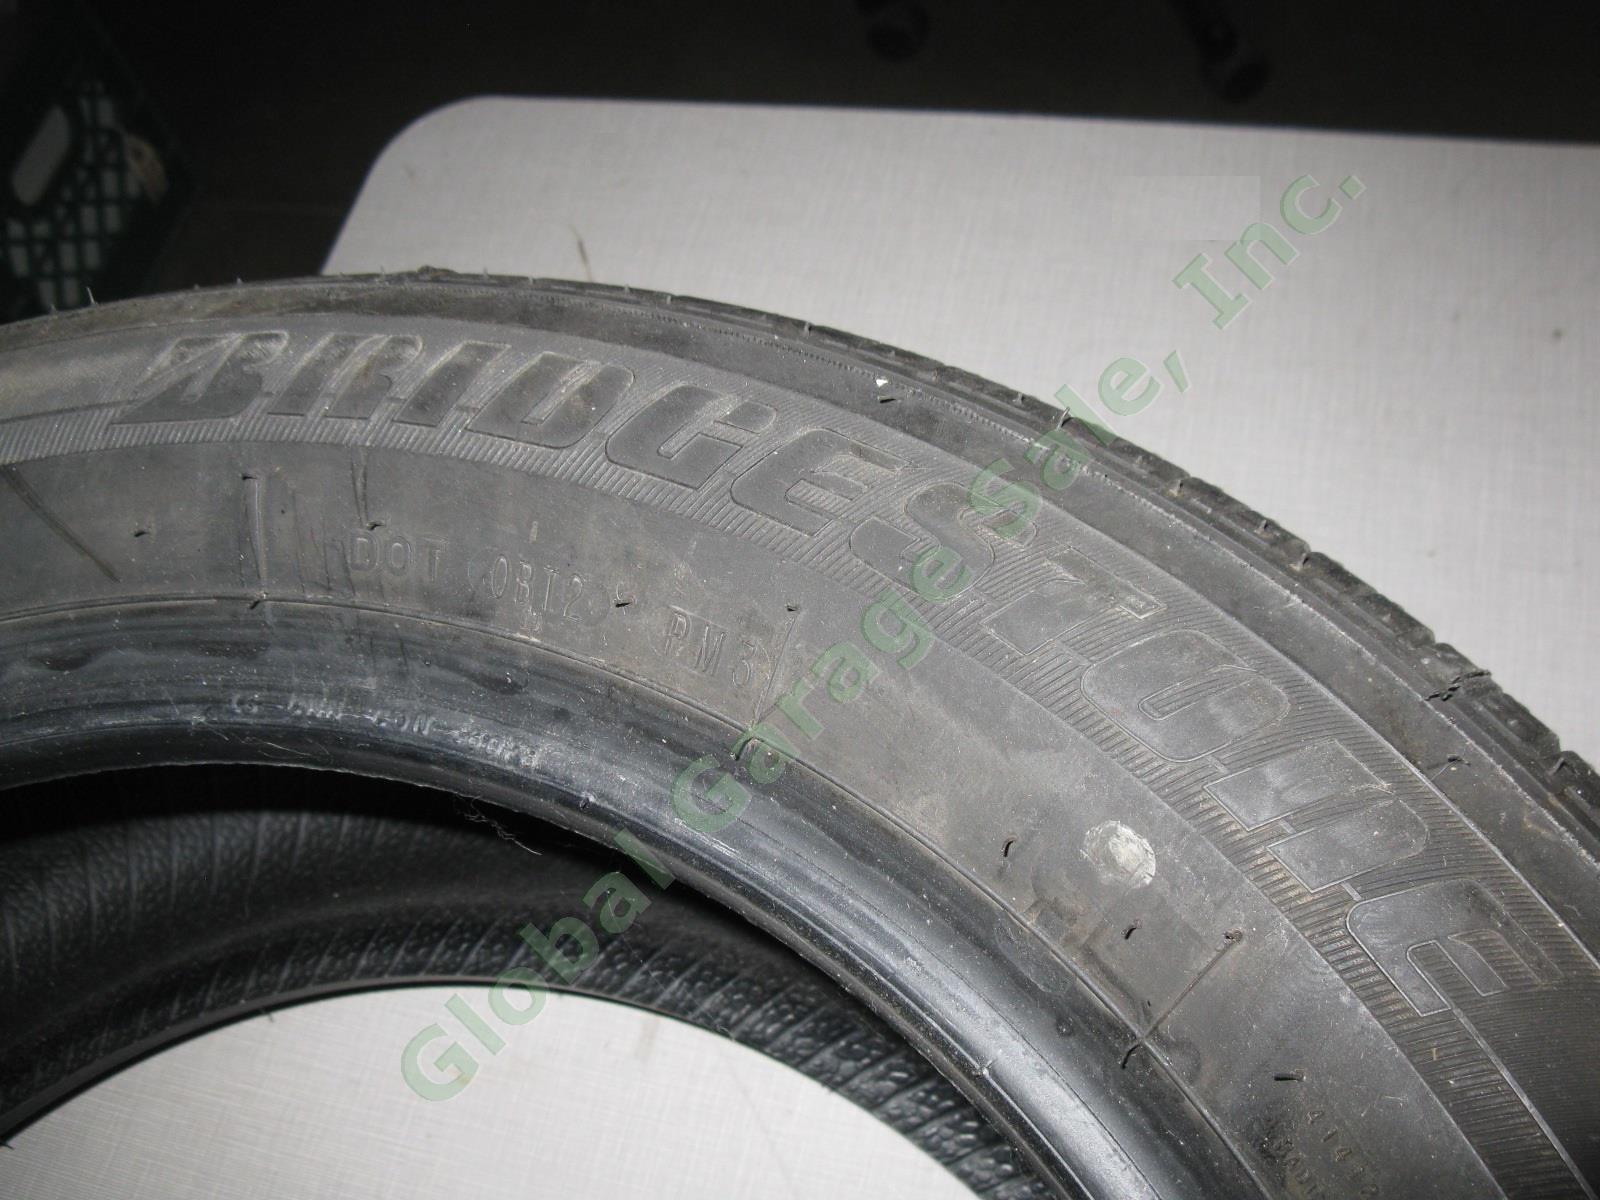 4 Bridgestone Turanza EL400-02 16" P205/55R16 89H M+S RFT Tires Set ~200 Miles!! 4